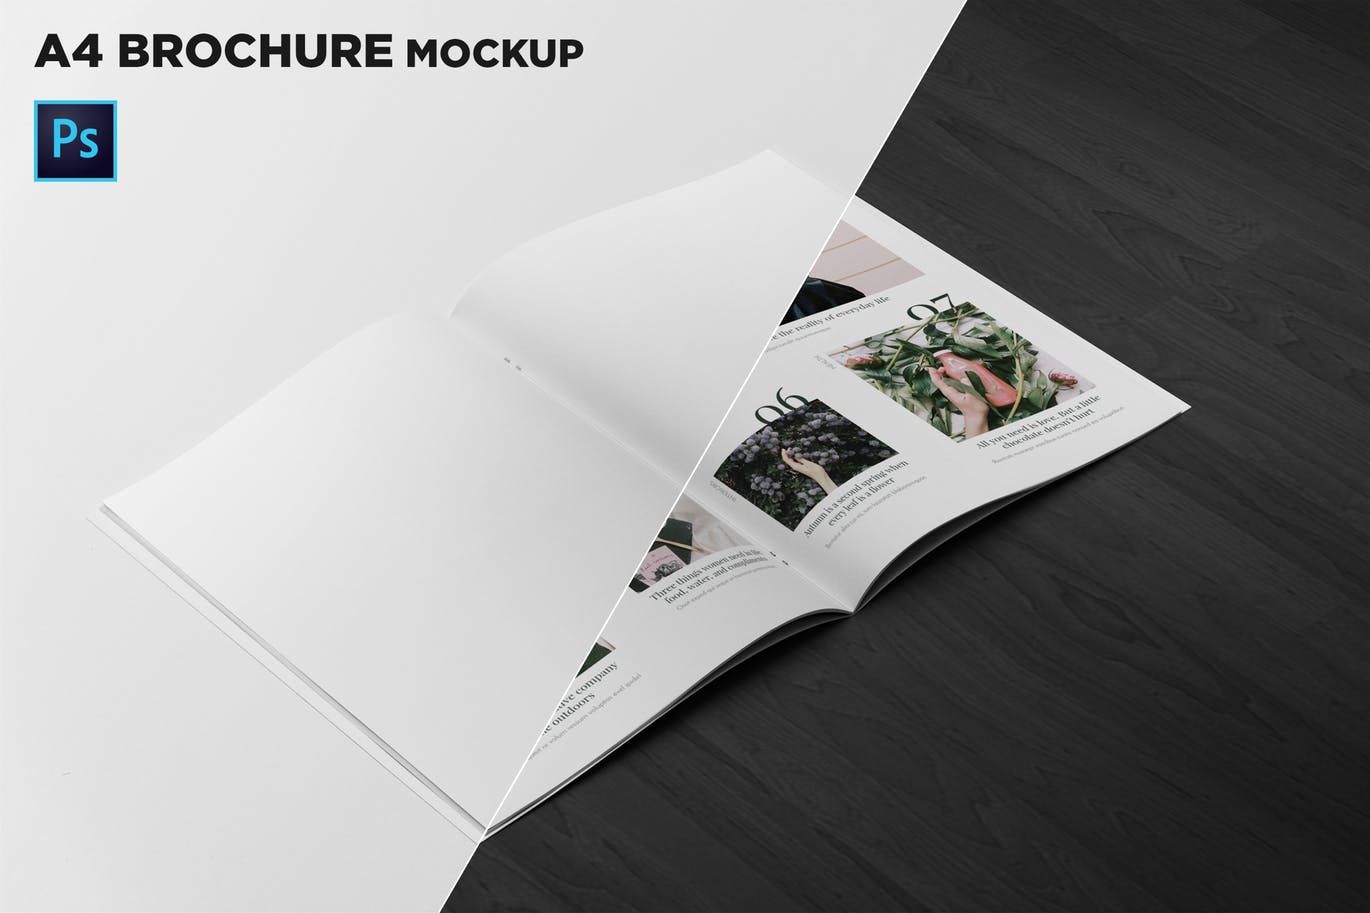 A4宣传小册子/企业画册内页版式设计45度角视图样机素材库精选 A4 Brochure Mockup 2 Pages Spread插图